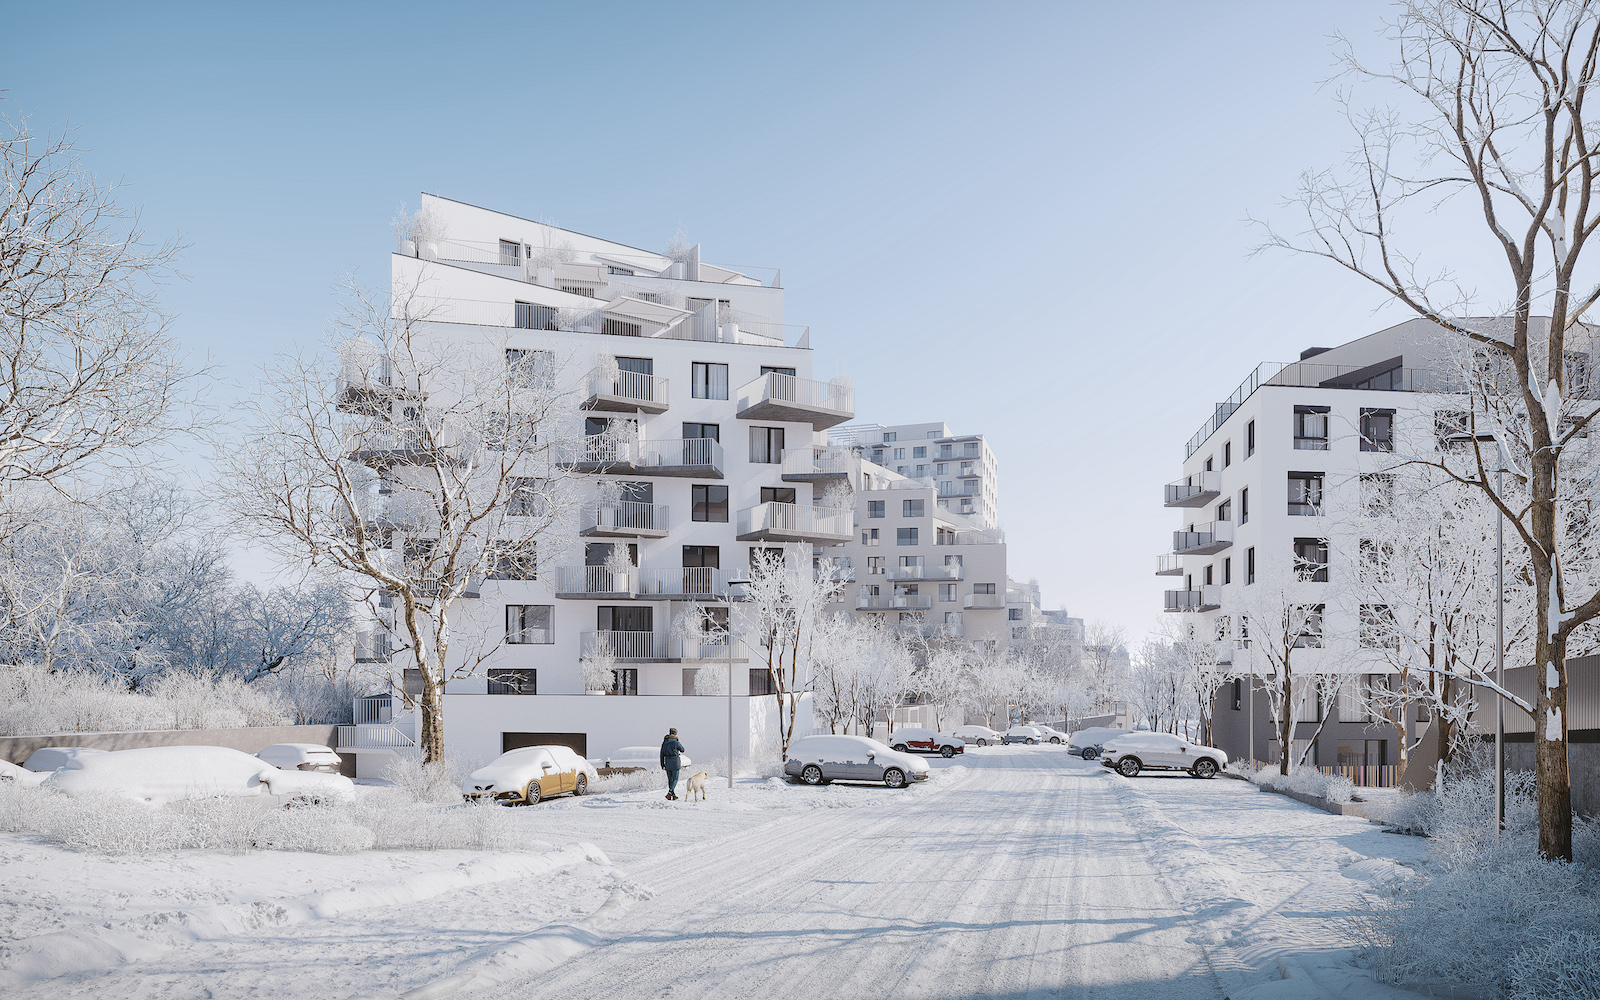 Vizualizácia 3. etapy rezidenčného projektu Čerešne.